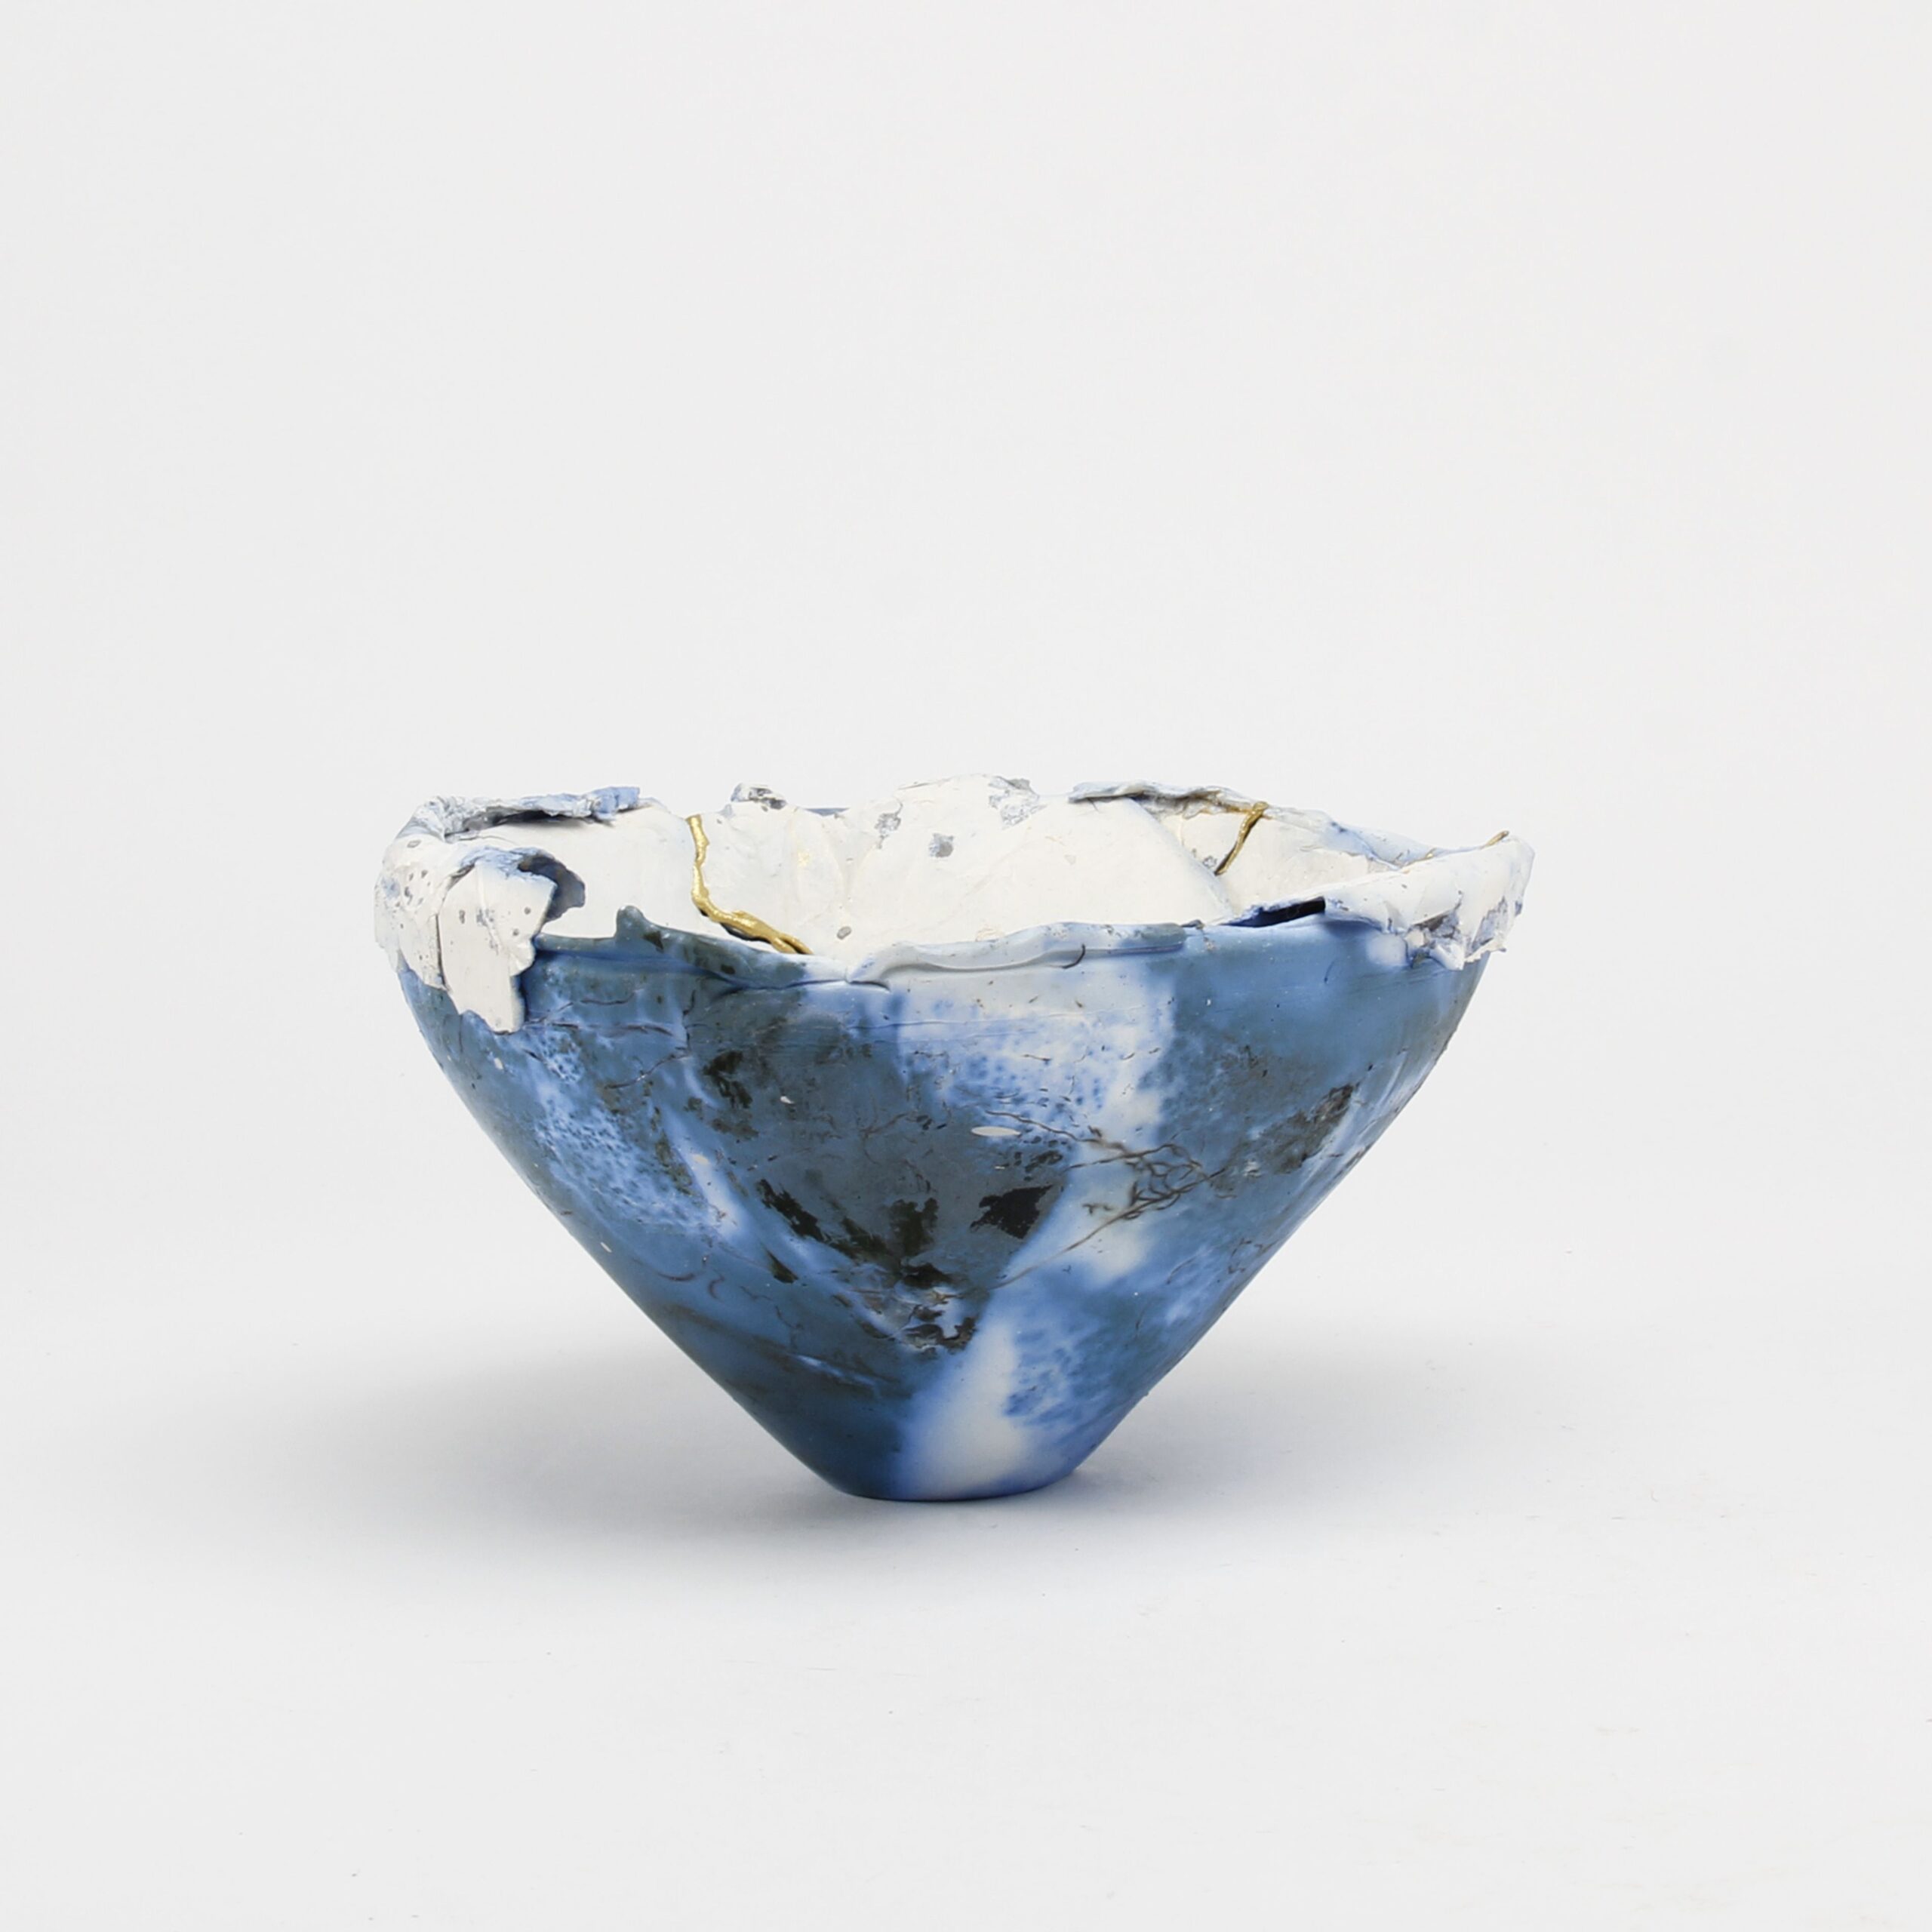 Alison Brannen: Medium Sculptural Bowl Product Image 1 of 3